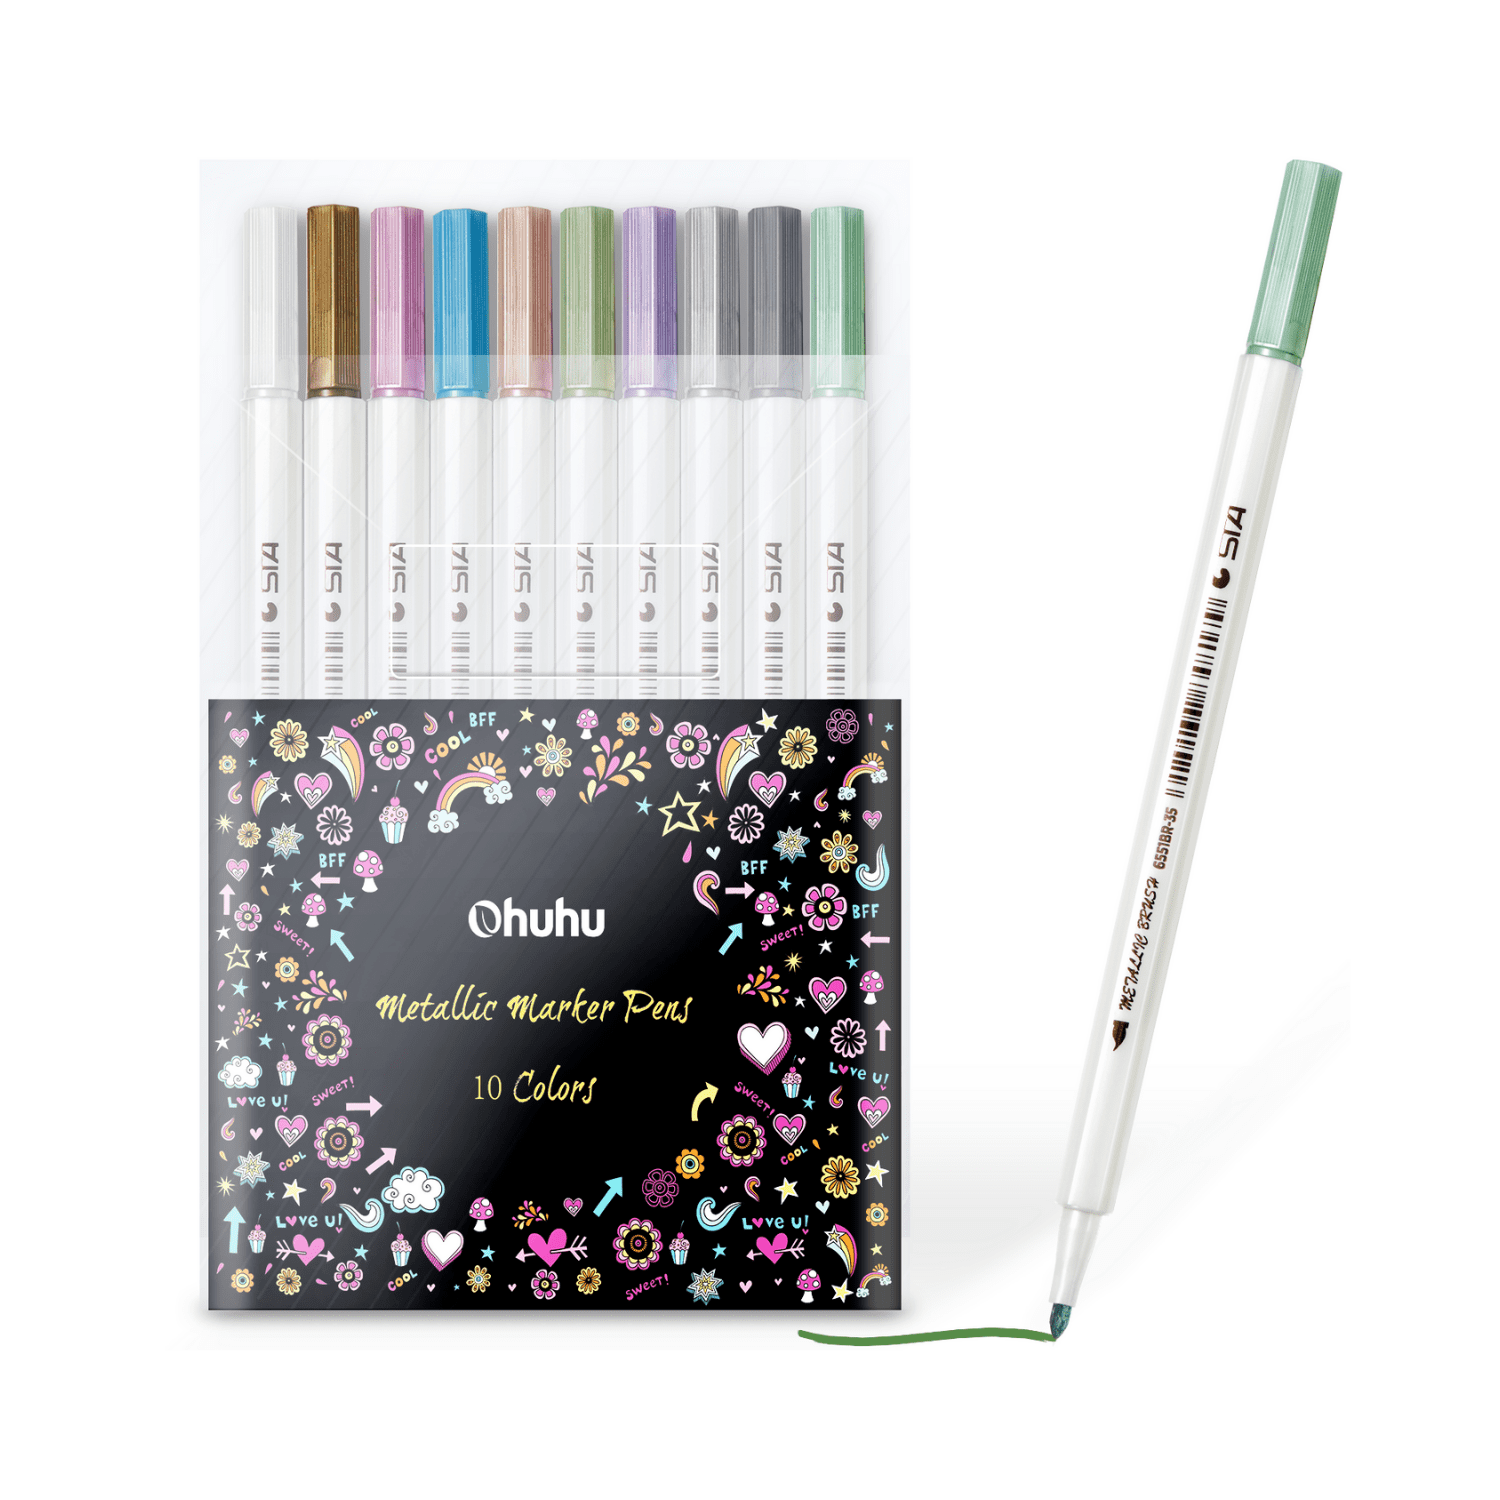 Ohuhu Glitter Markers Pen 12 Glitter Colors Metallic Vietnam